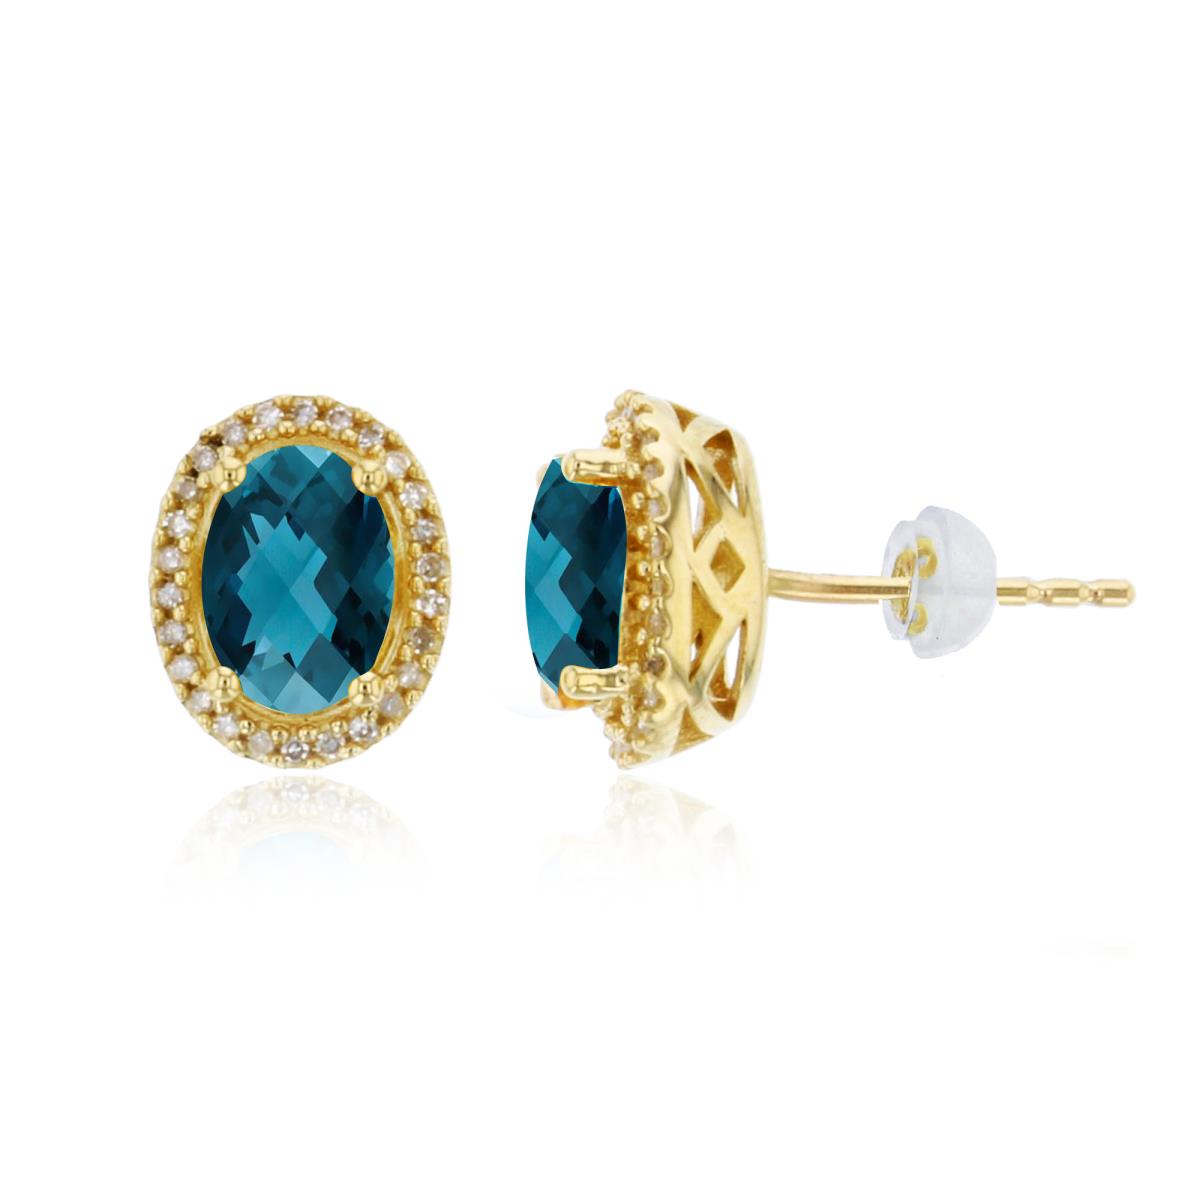 14K Yellow Gold 0.156cttw Rnd Diamonds & 7x5mm Ov London Blue Topaz Halo Earrings